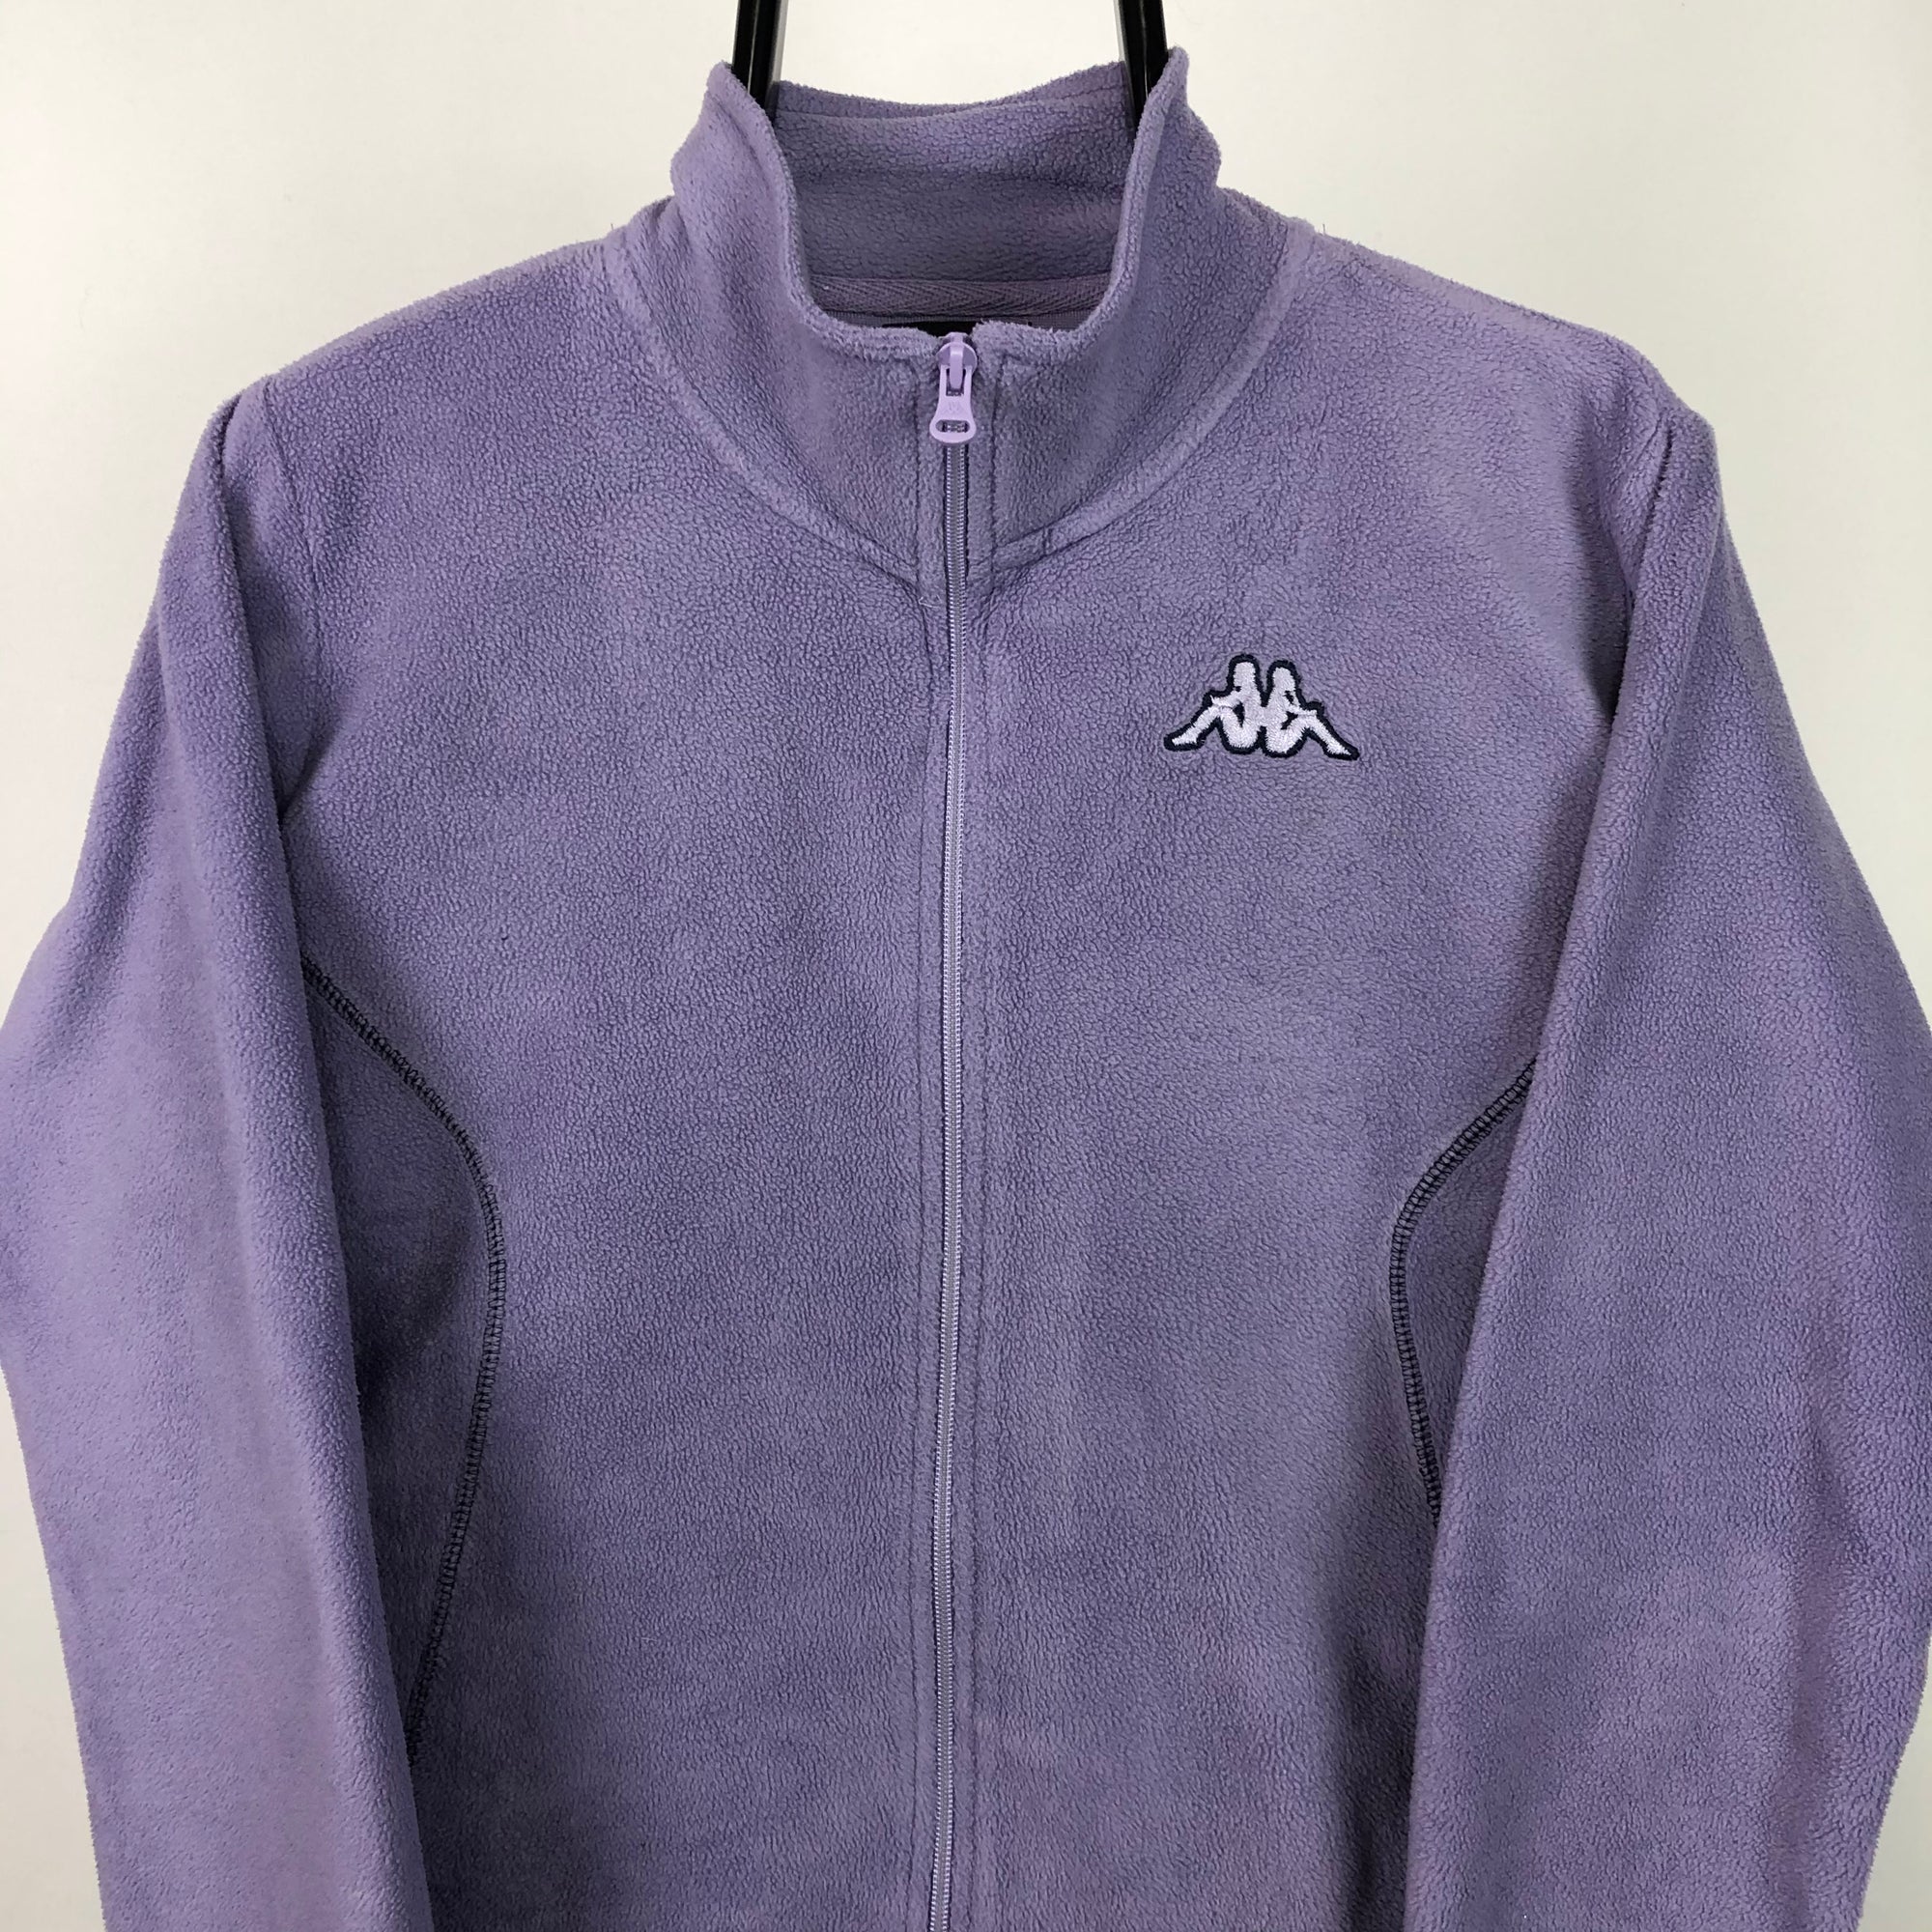 Vintage Kappa Fleece in Purple - Men's Small/Women's Medium